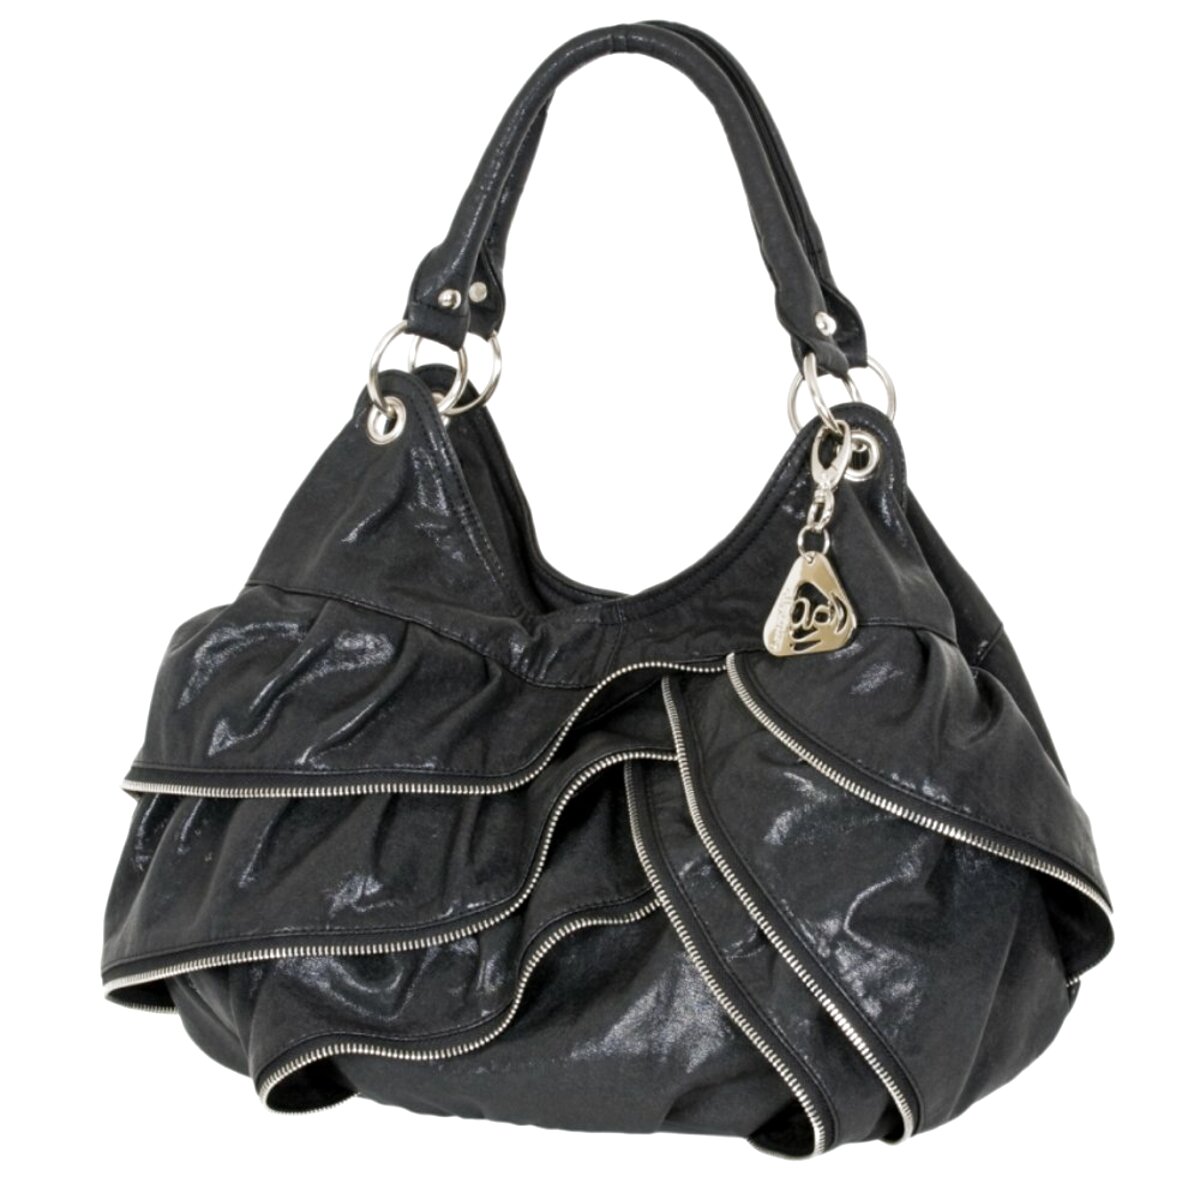 Gabriella Handbags for sale in UK | 30 used Gabriella Handbags